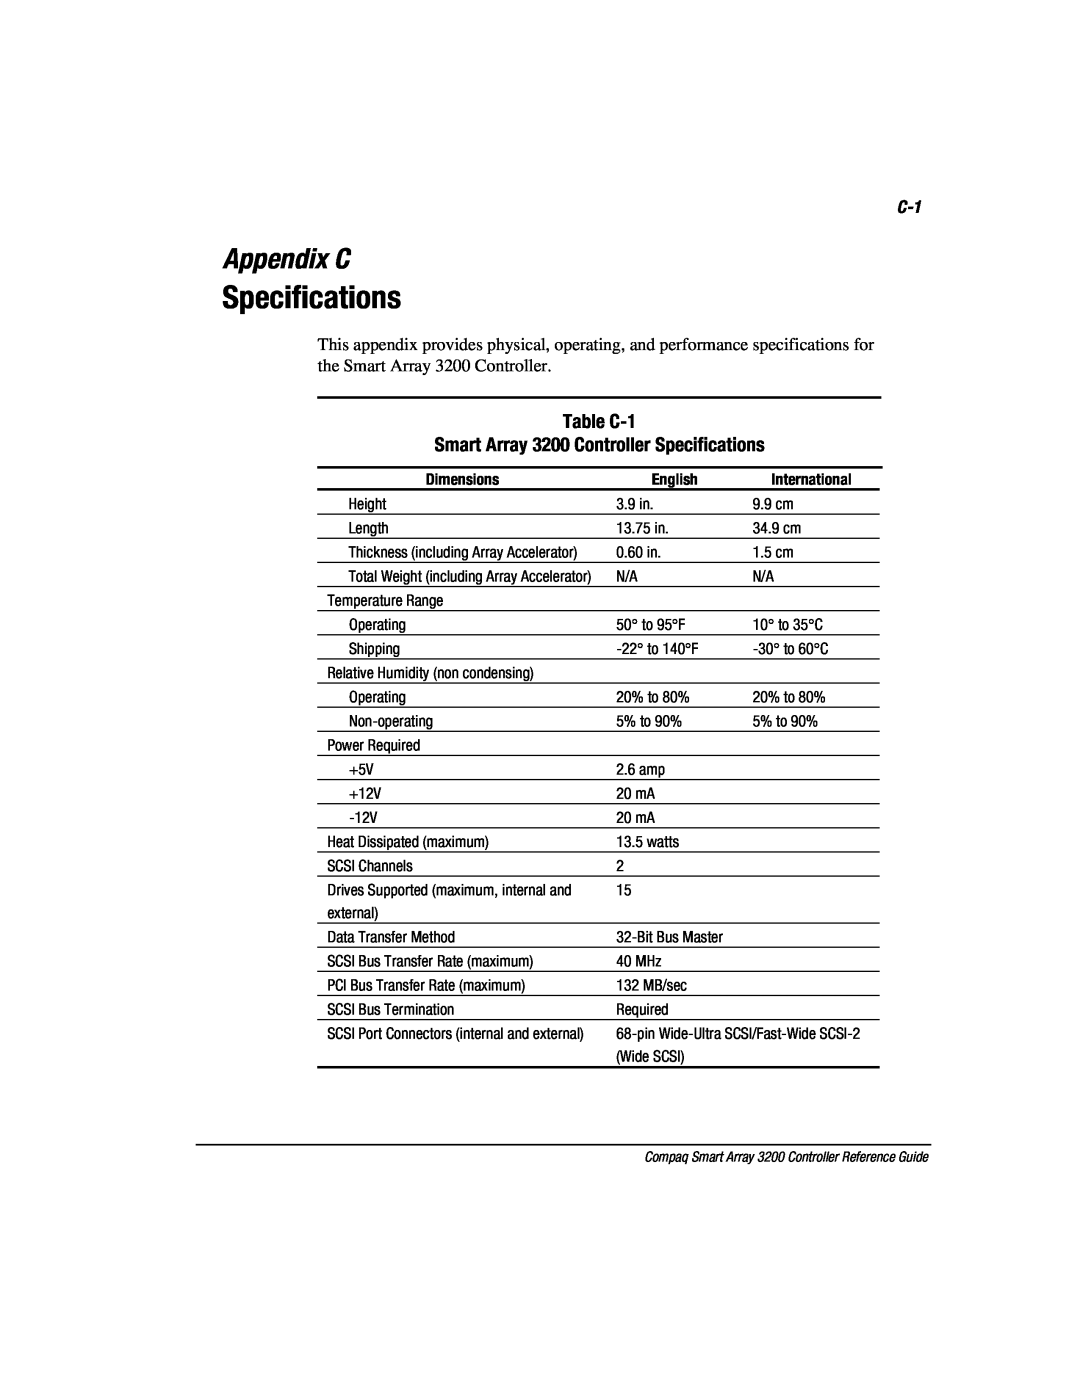 Compaq manual Appendix C, Table C-1 Smart Array 3200 Controller Specifications, Dimensions, English, International 